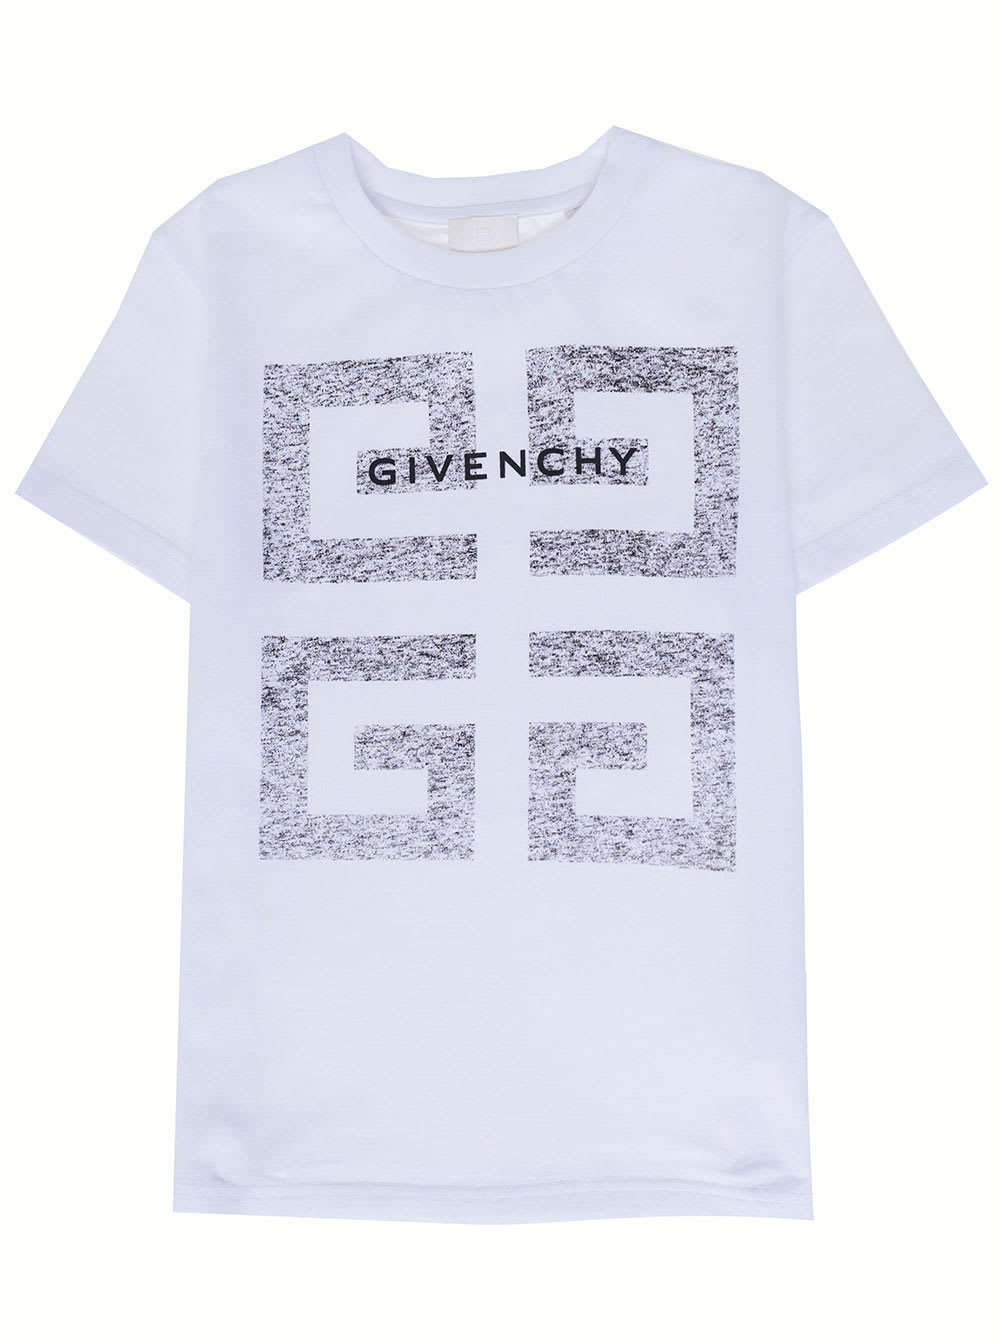 Givenchy Boy Cotton White T-shirt With Logo Print